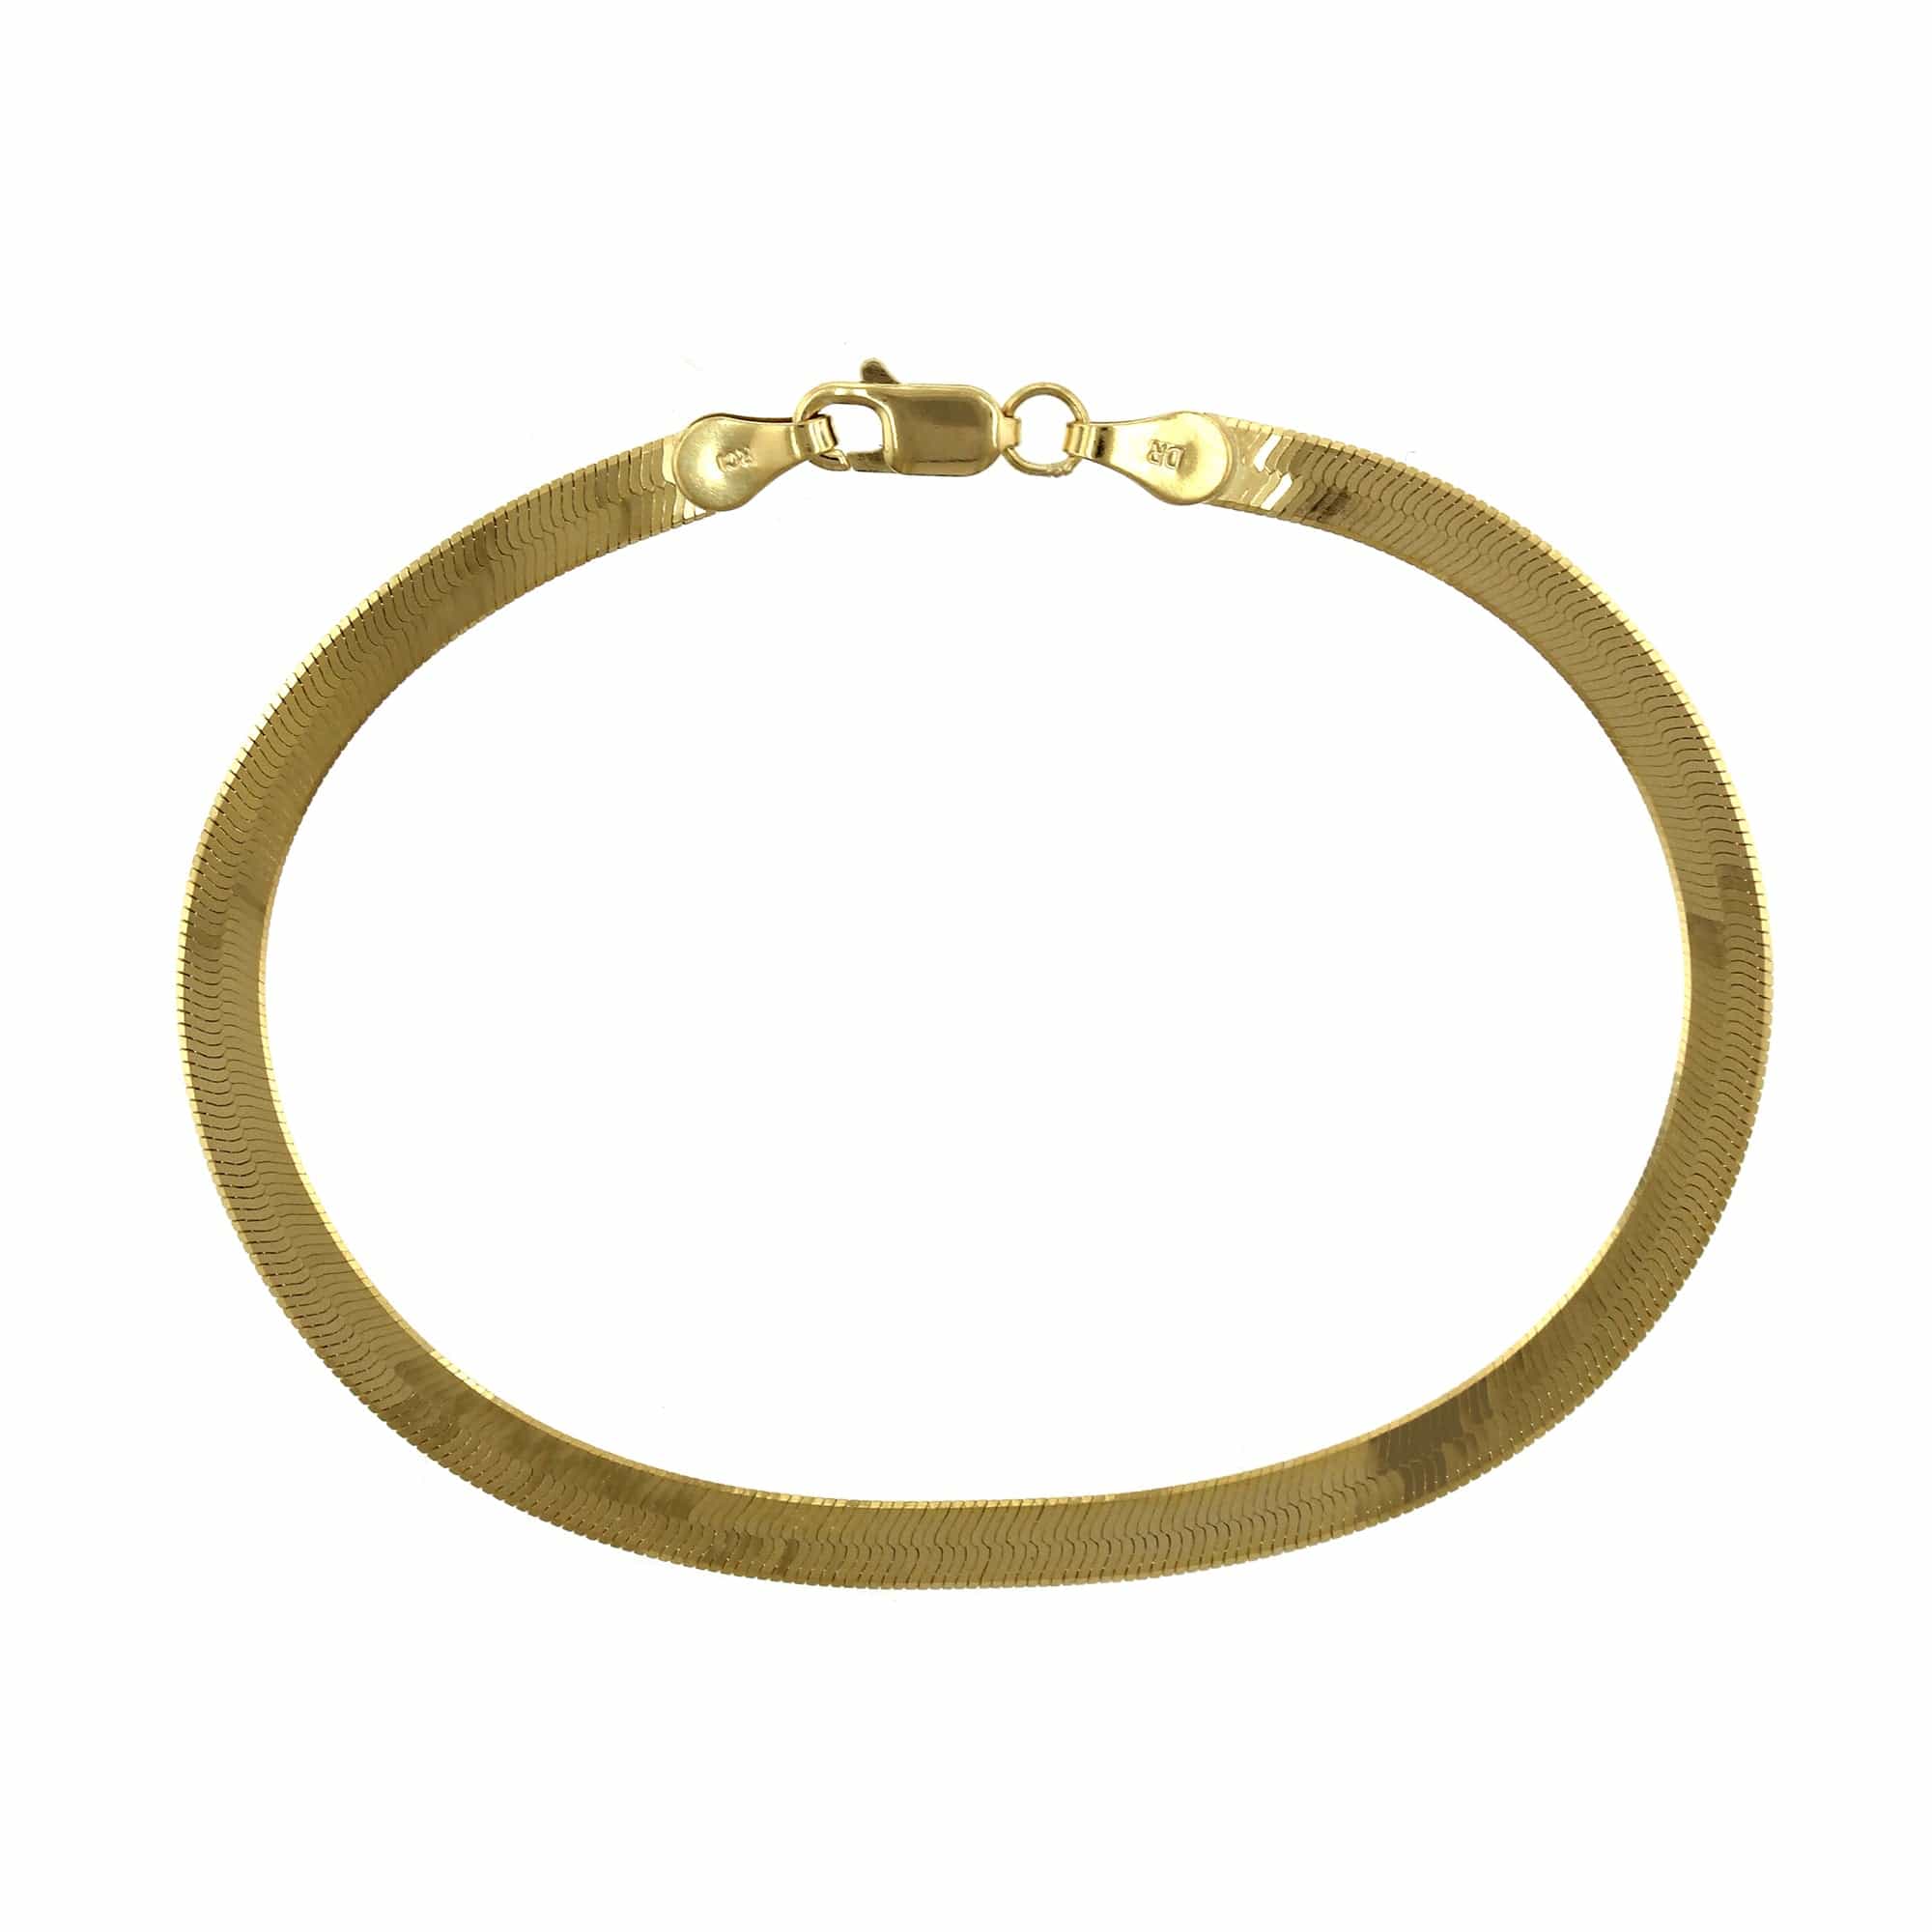 Gold Herringbone Bracelet, 14K Solid Gold Chain Bracelet, Chevron Bracelet,  Fishtail, Stacking Bracelet, Sailor Lock Jewelry Gift for Her 